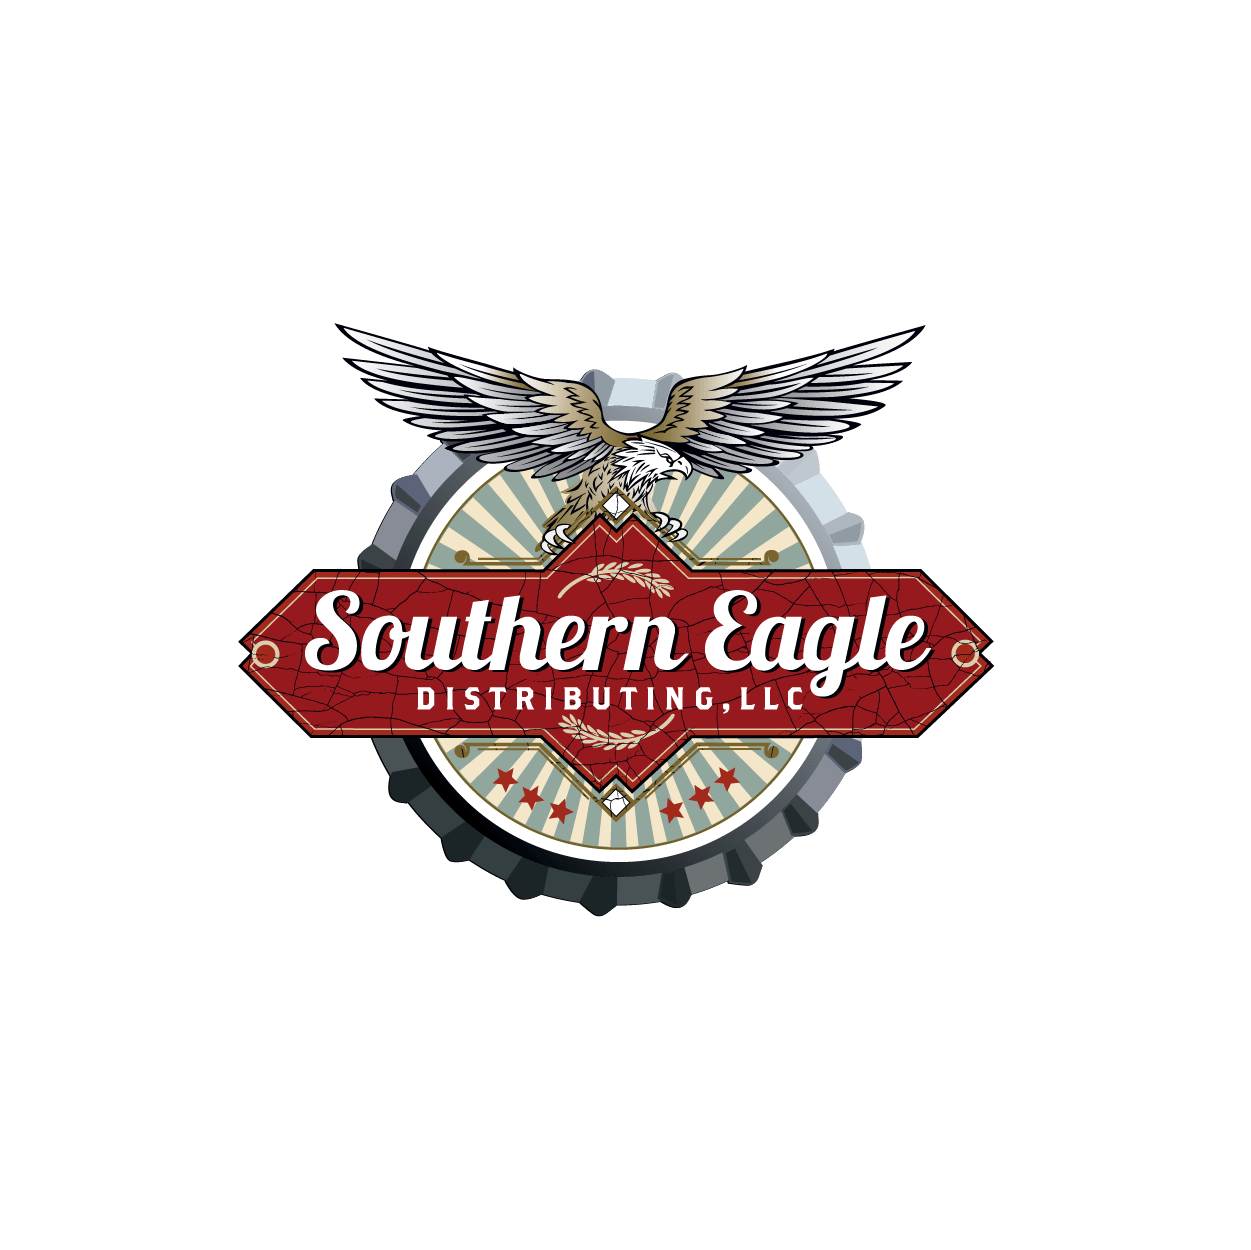 Southern eagle